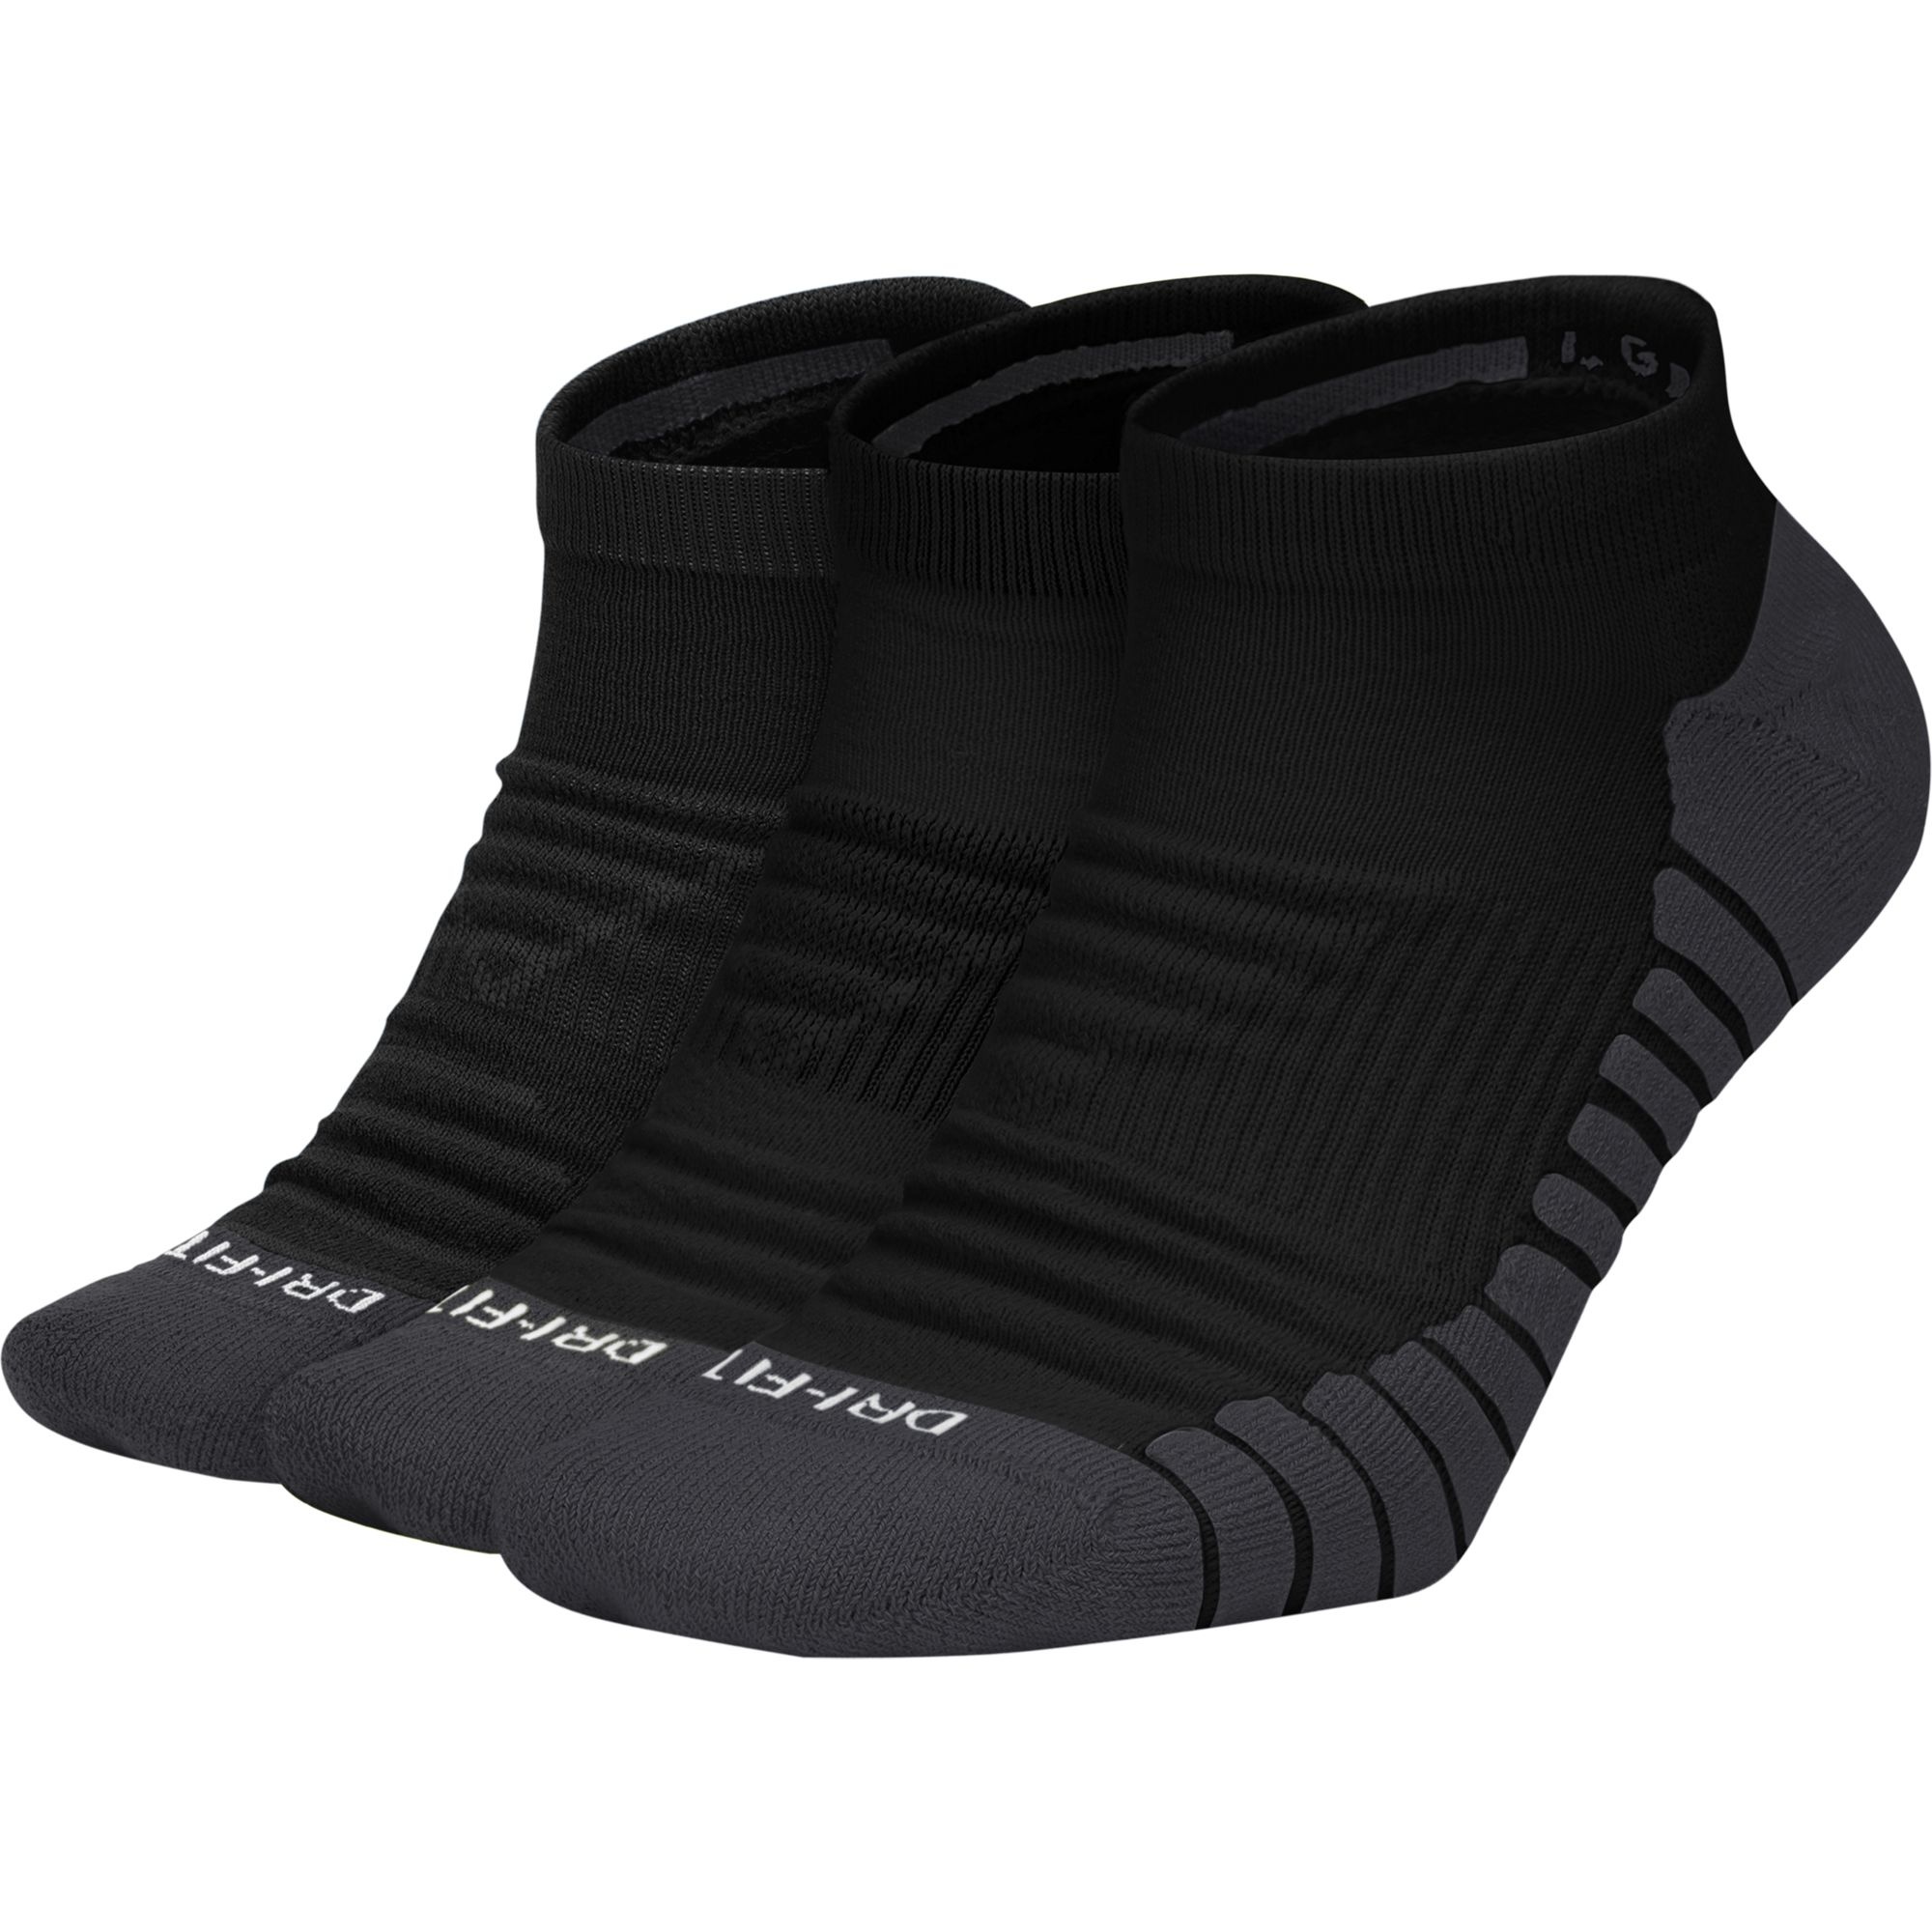 SX6964-010 | Nike Everyday Lightweight Socks. | Black / White